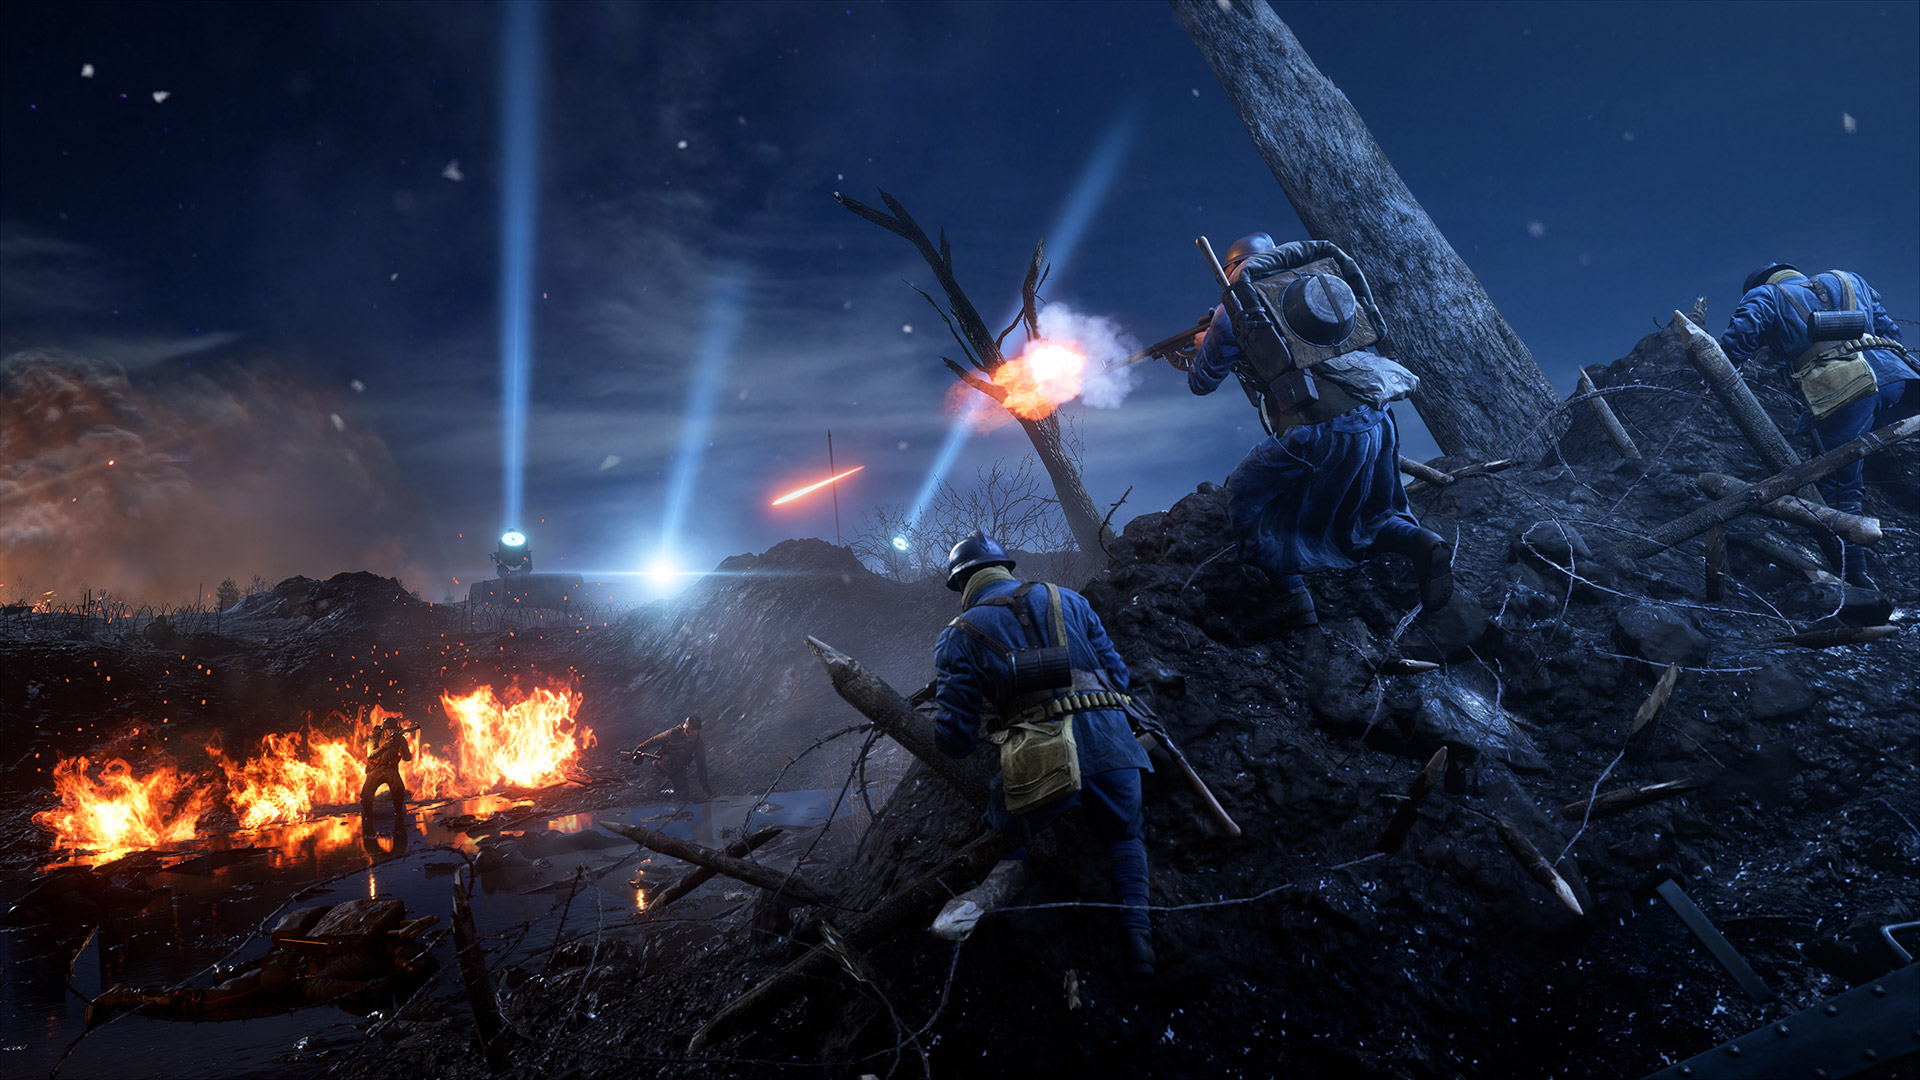 Battlefield 1 - Nivelle Nights screenshot 11185